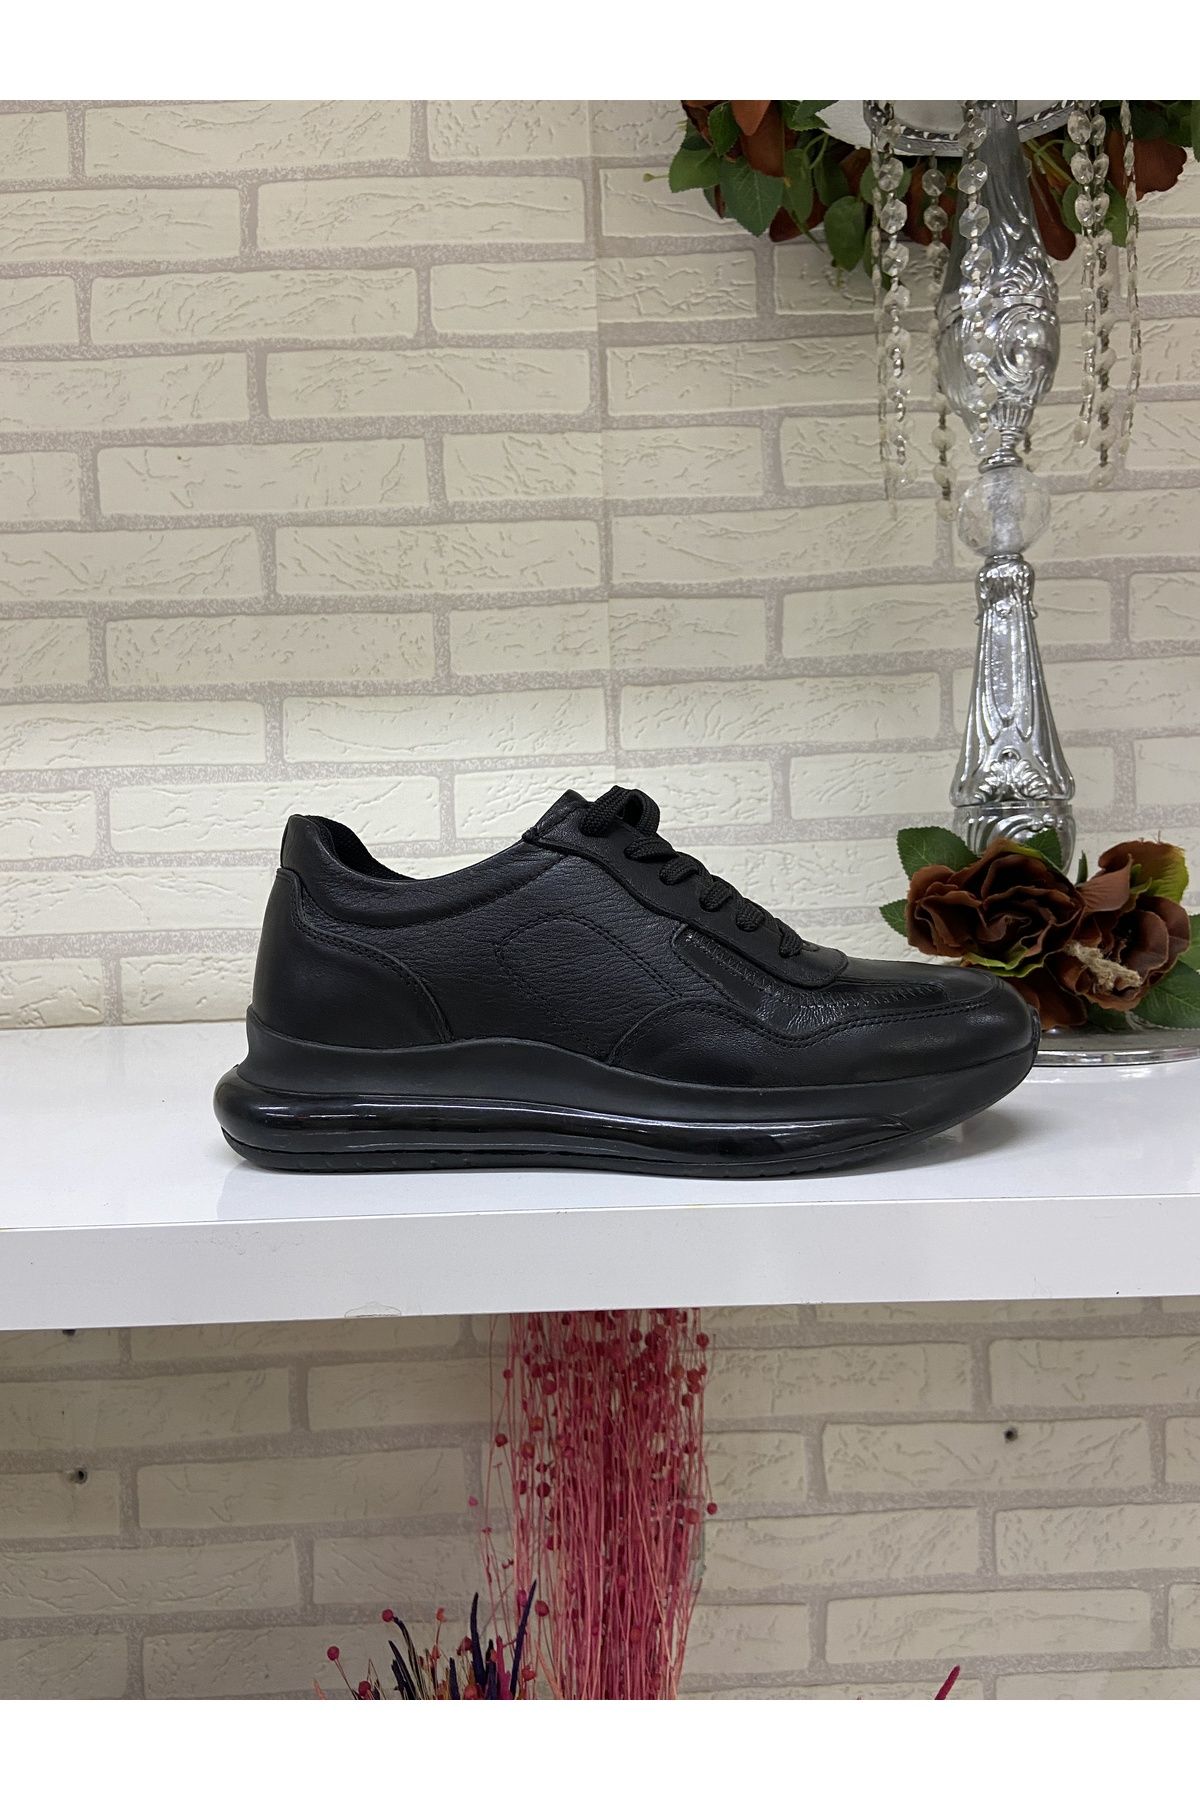 PUNTO hakiki deri siyaherkek ortapedik air sport casual ayakkabı